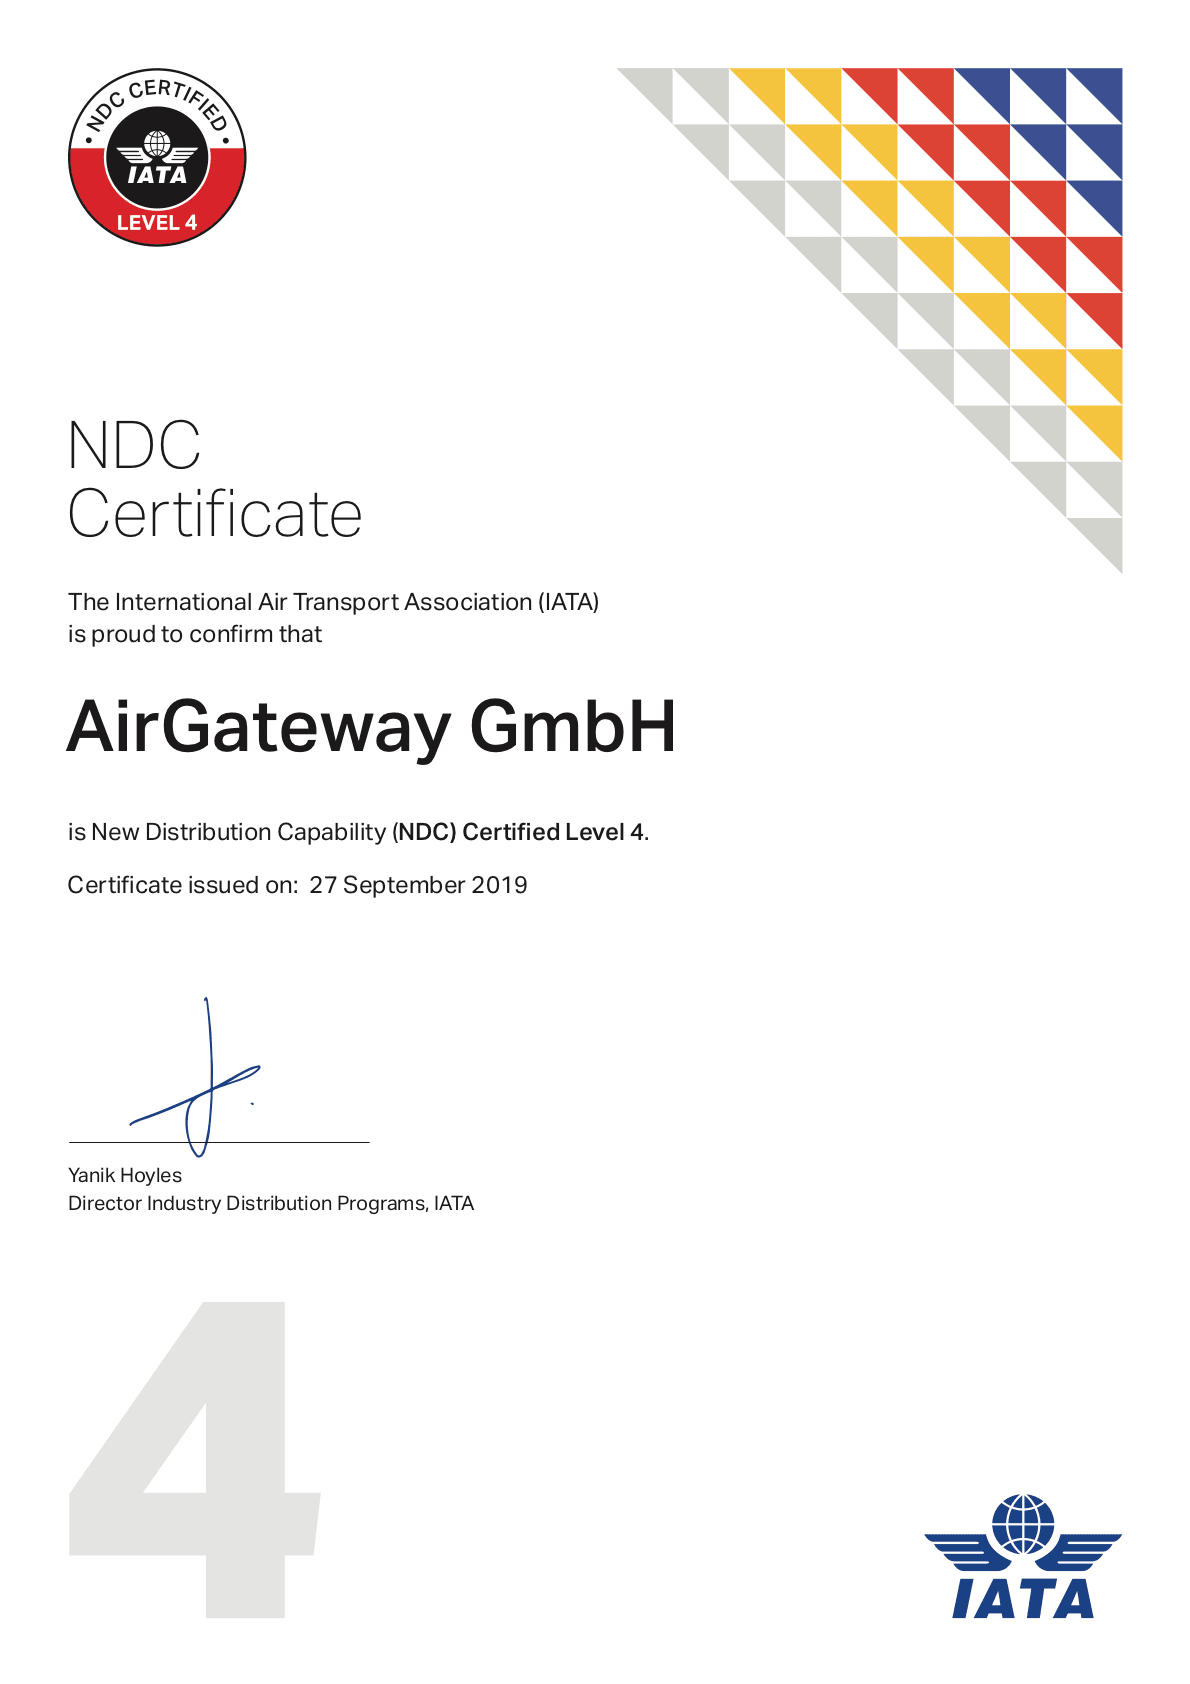 iata-ndc_certified_airgateway-gmbh-level4-export.png